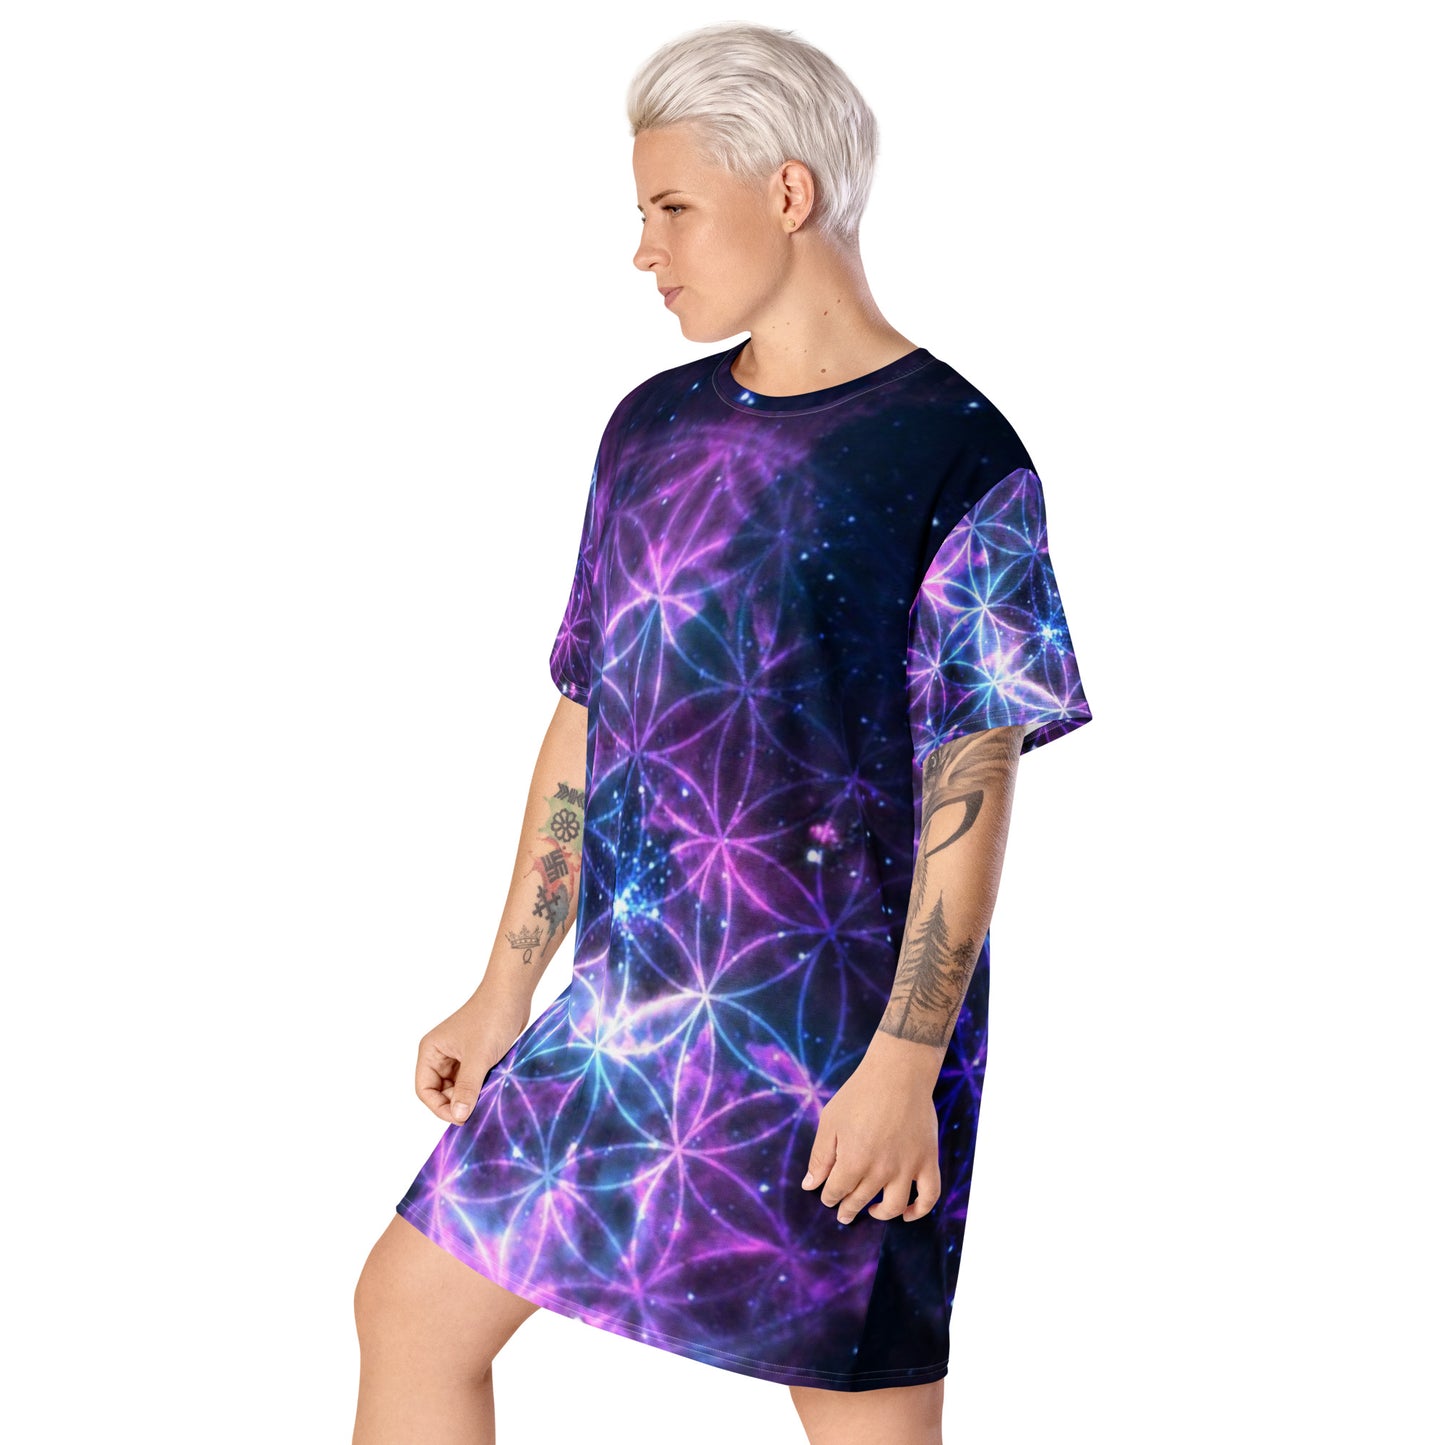 Cosmic Flower of Life T-shirt dress